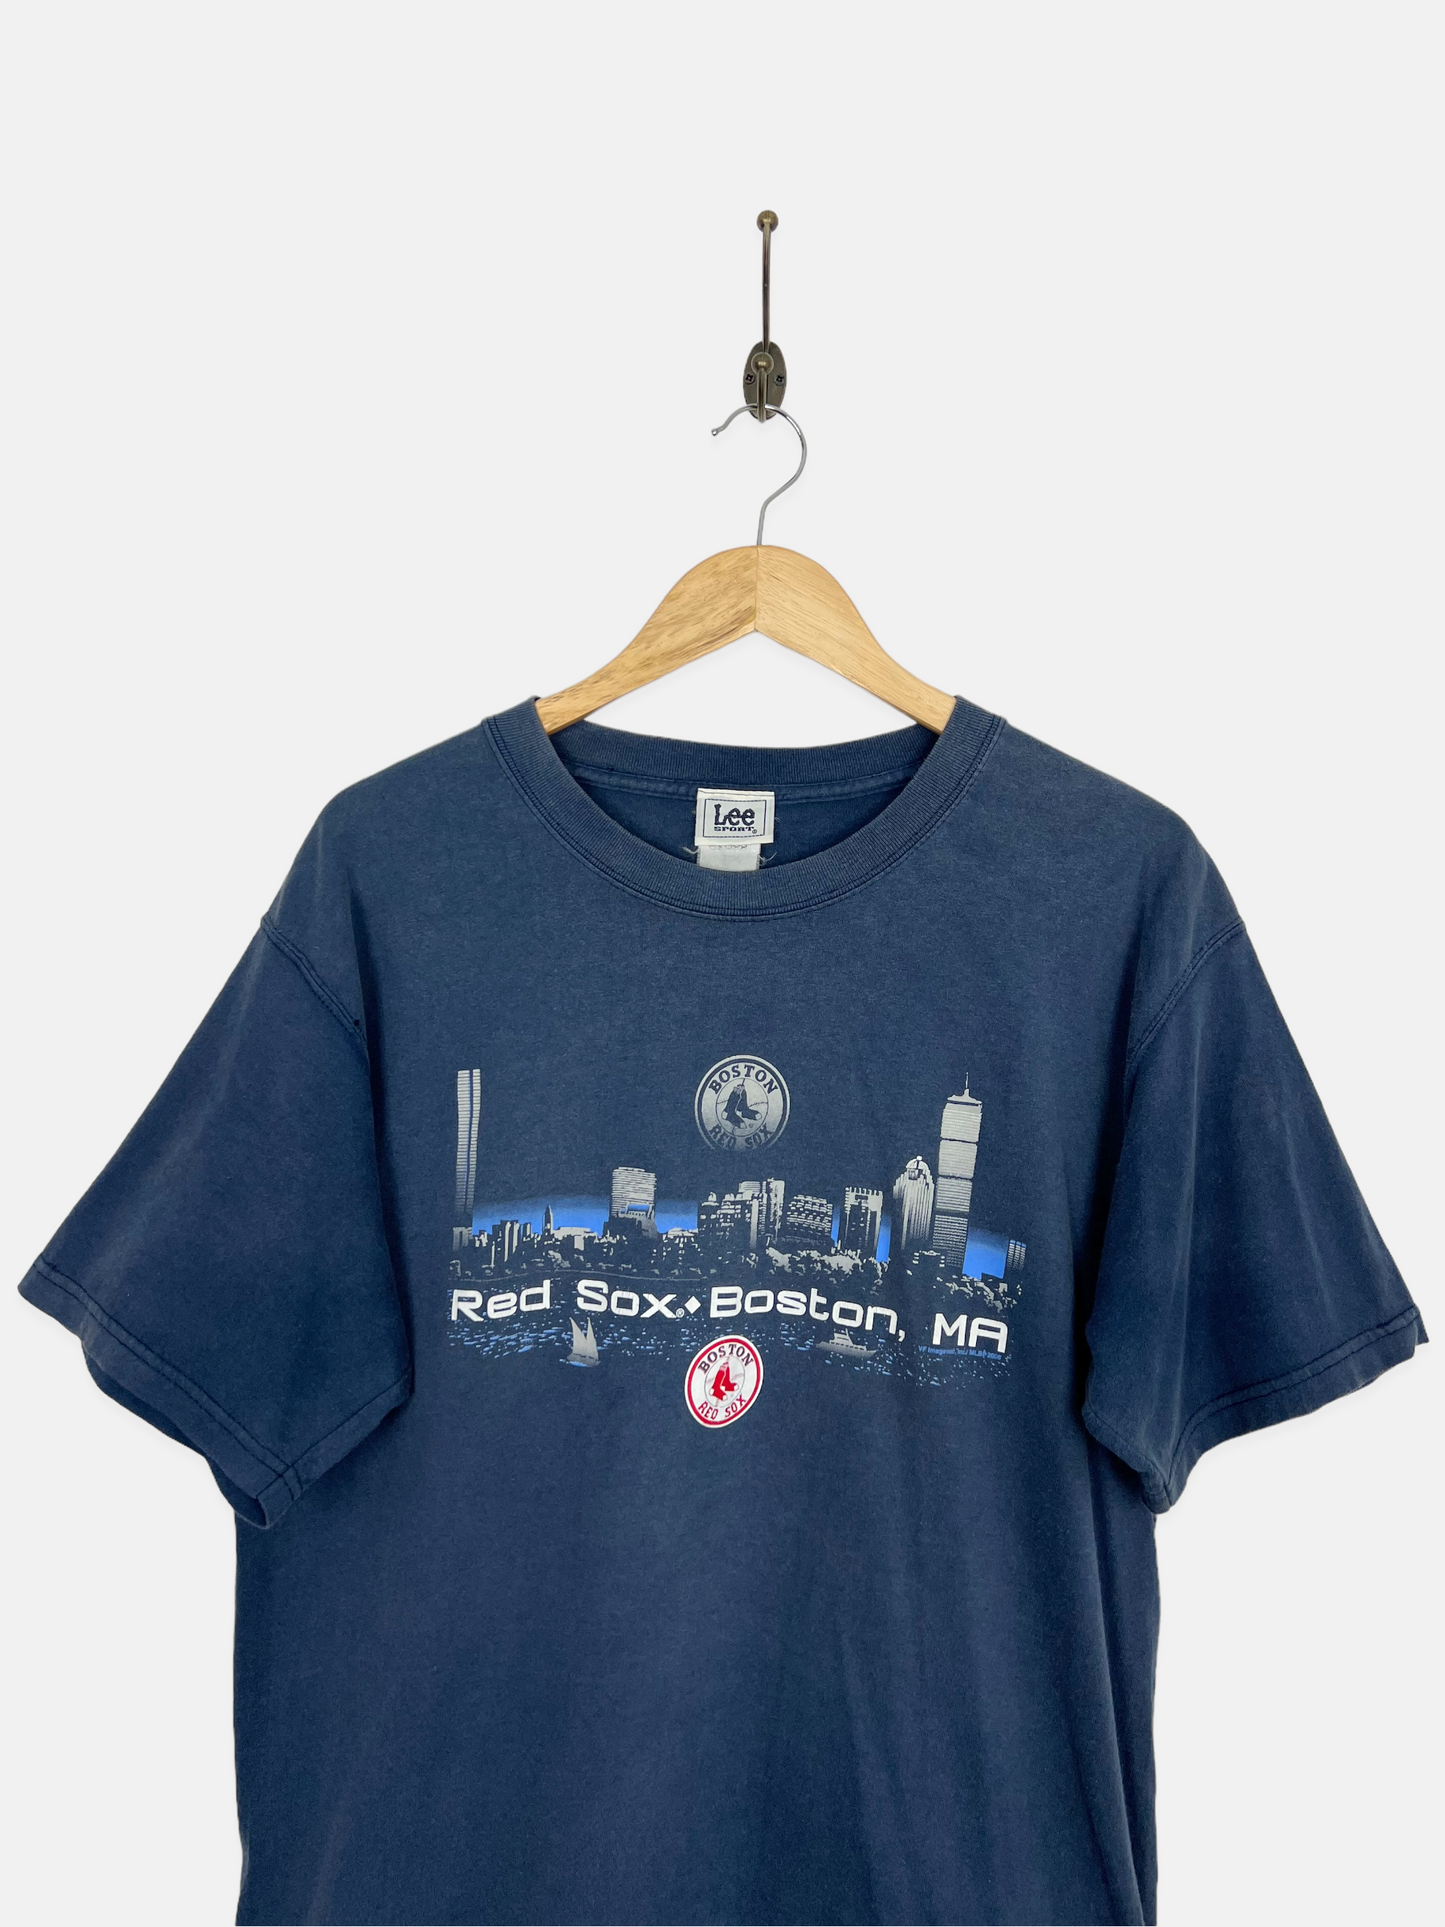 Boston Red Sox MLB Vintage T-Shirt Size M